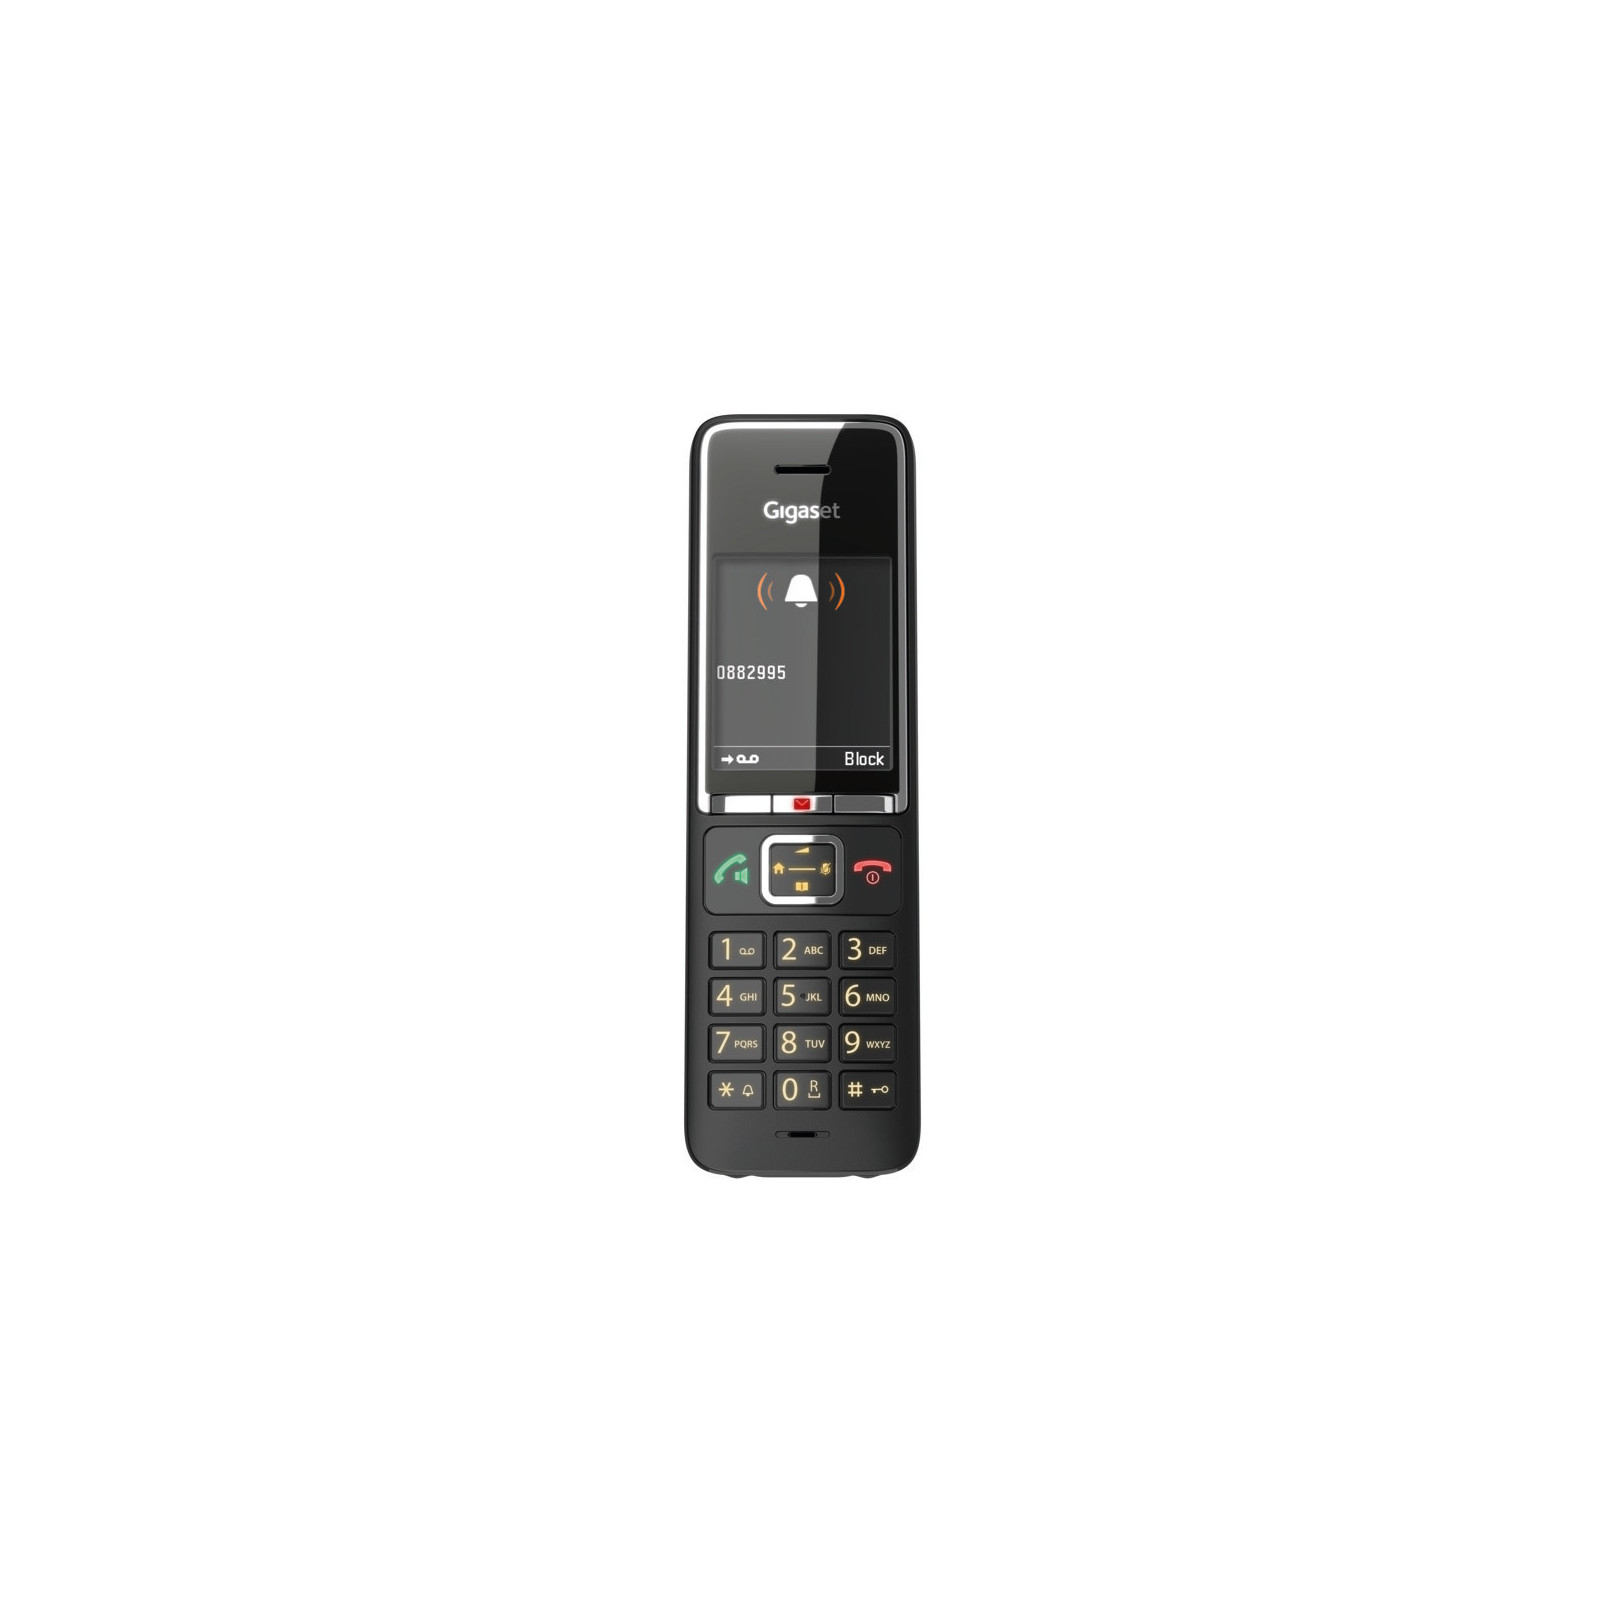 Телефон DECT Gigaset Comfort 550 AM Black Chrome (S30852H3021S304) зображення 6